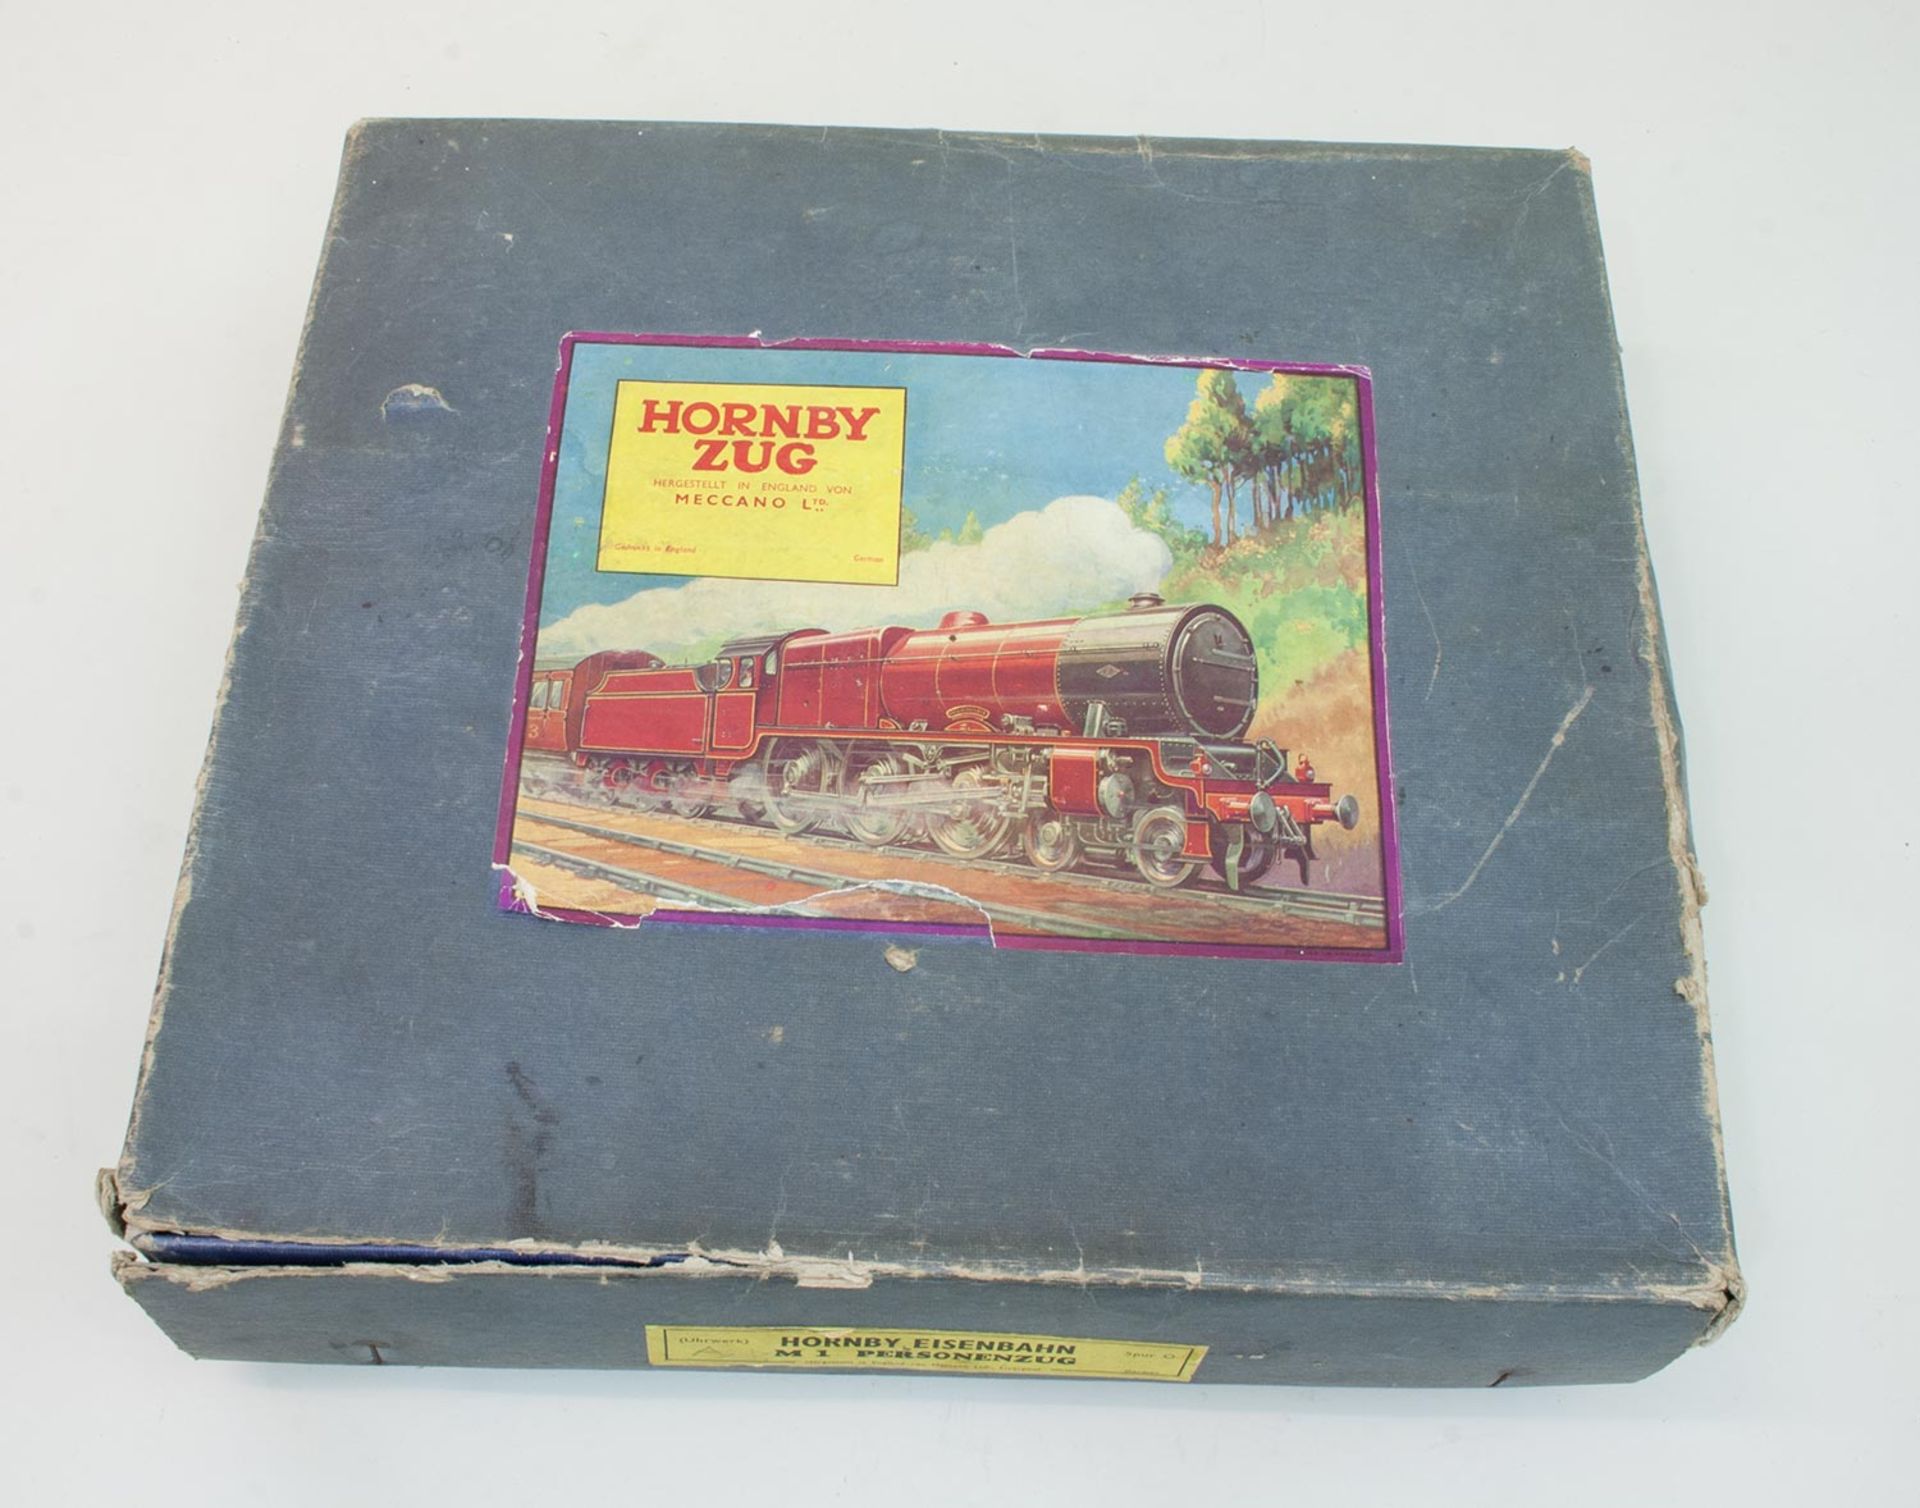 Hornby Zug Spielzeug Eisenbahn, Hersteller Meccano Ltd./ England, Spur 0, Blech lithografiert mit - Bild 2 aus 2